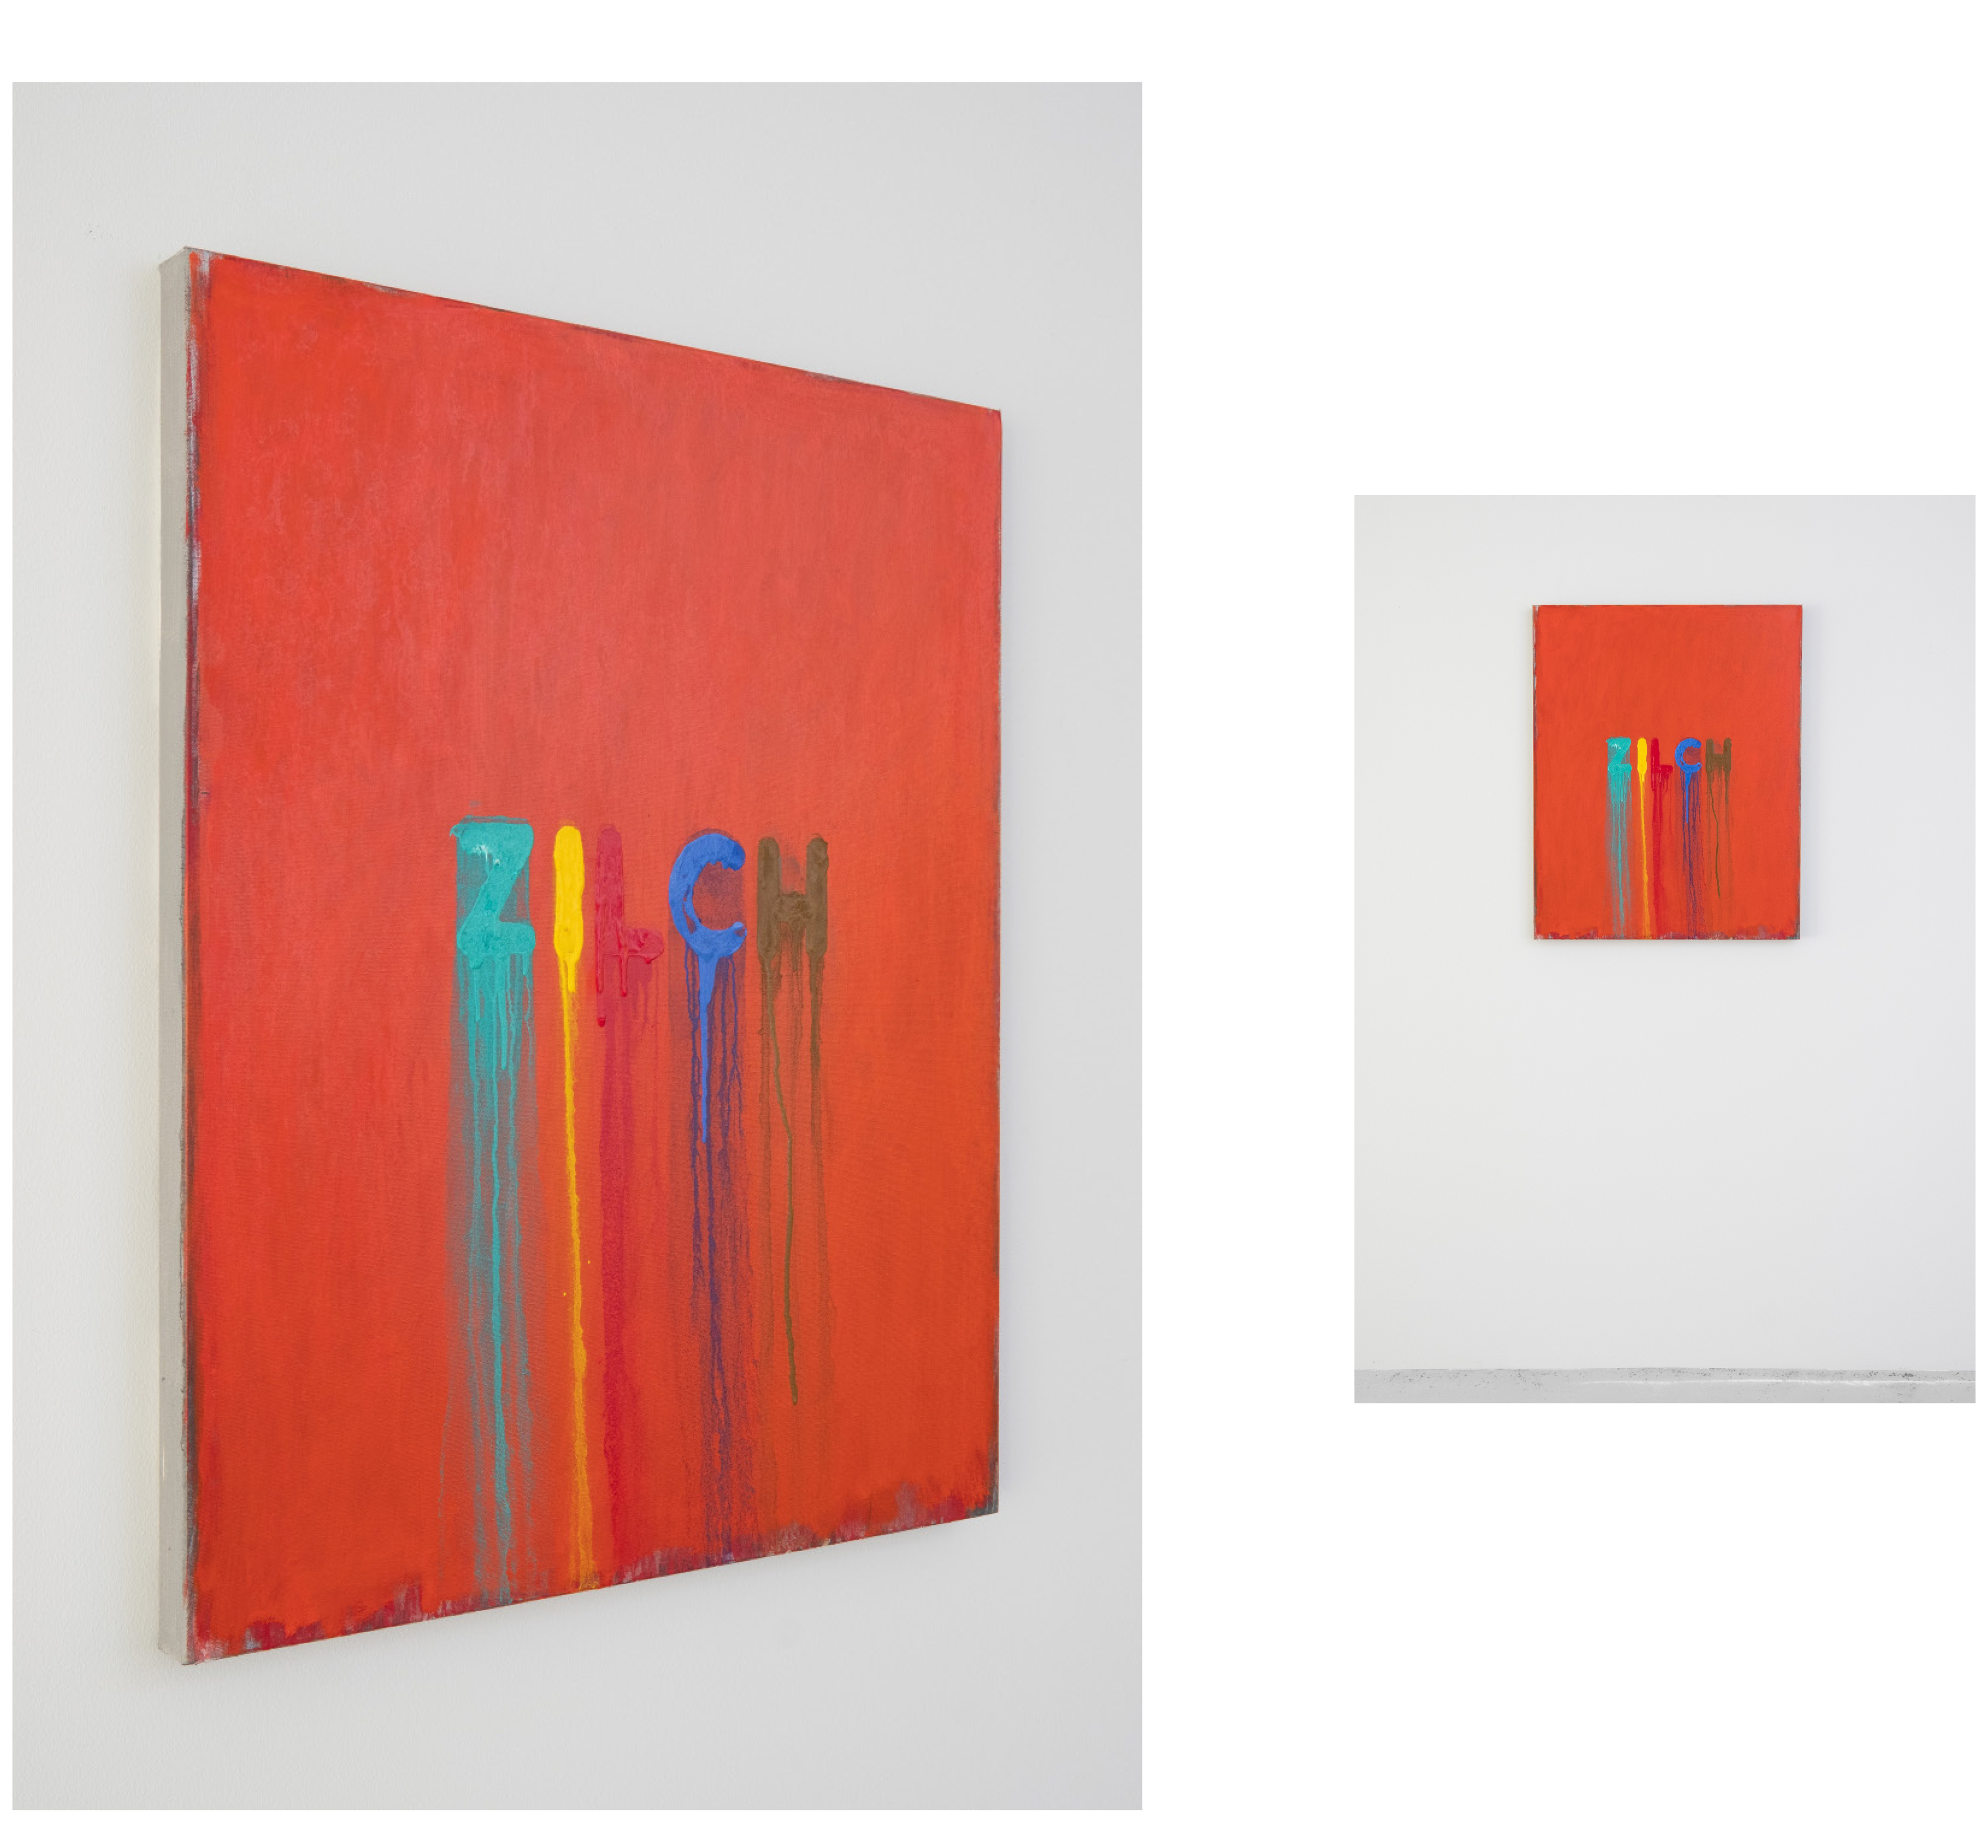 Mel Bochner - New Paintings - Viewing Room - Peter Freeman, Inc. Viewing Room